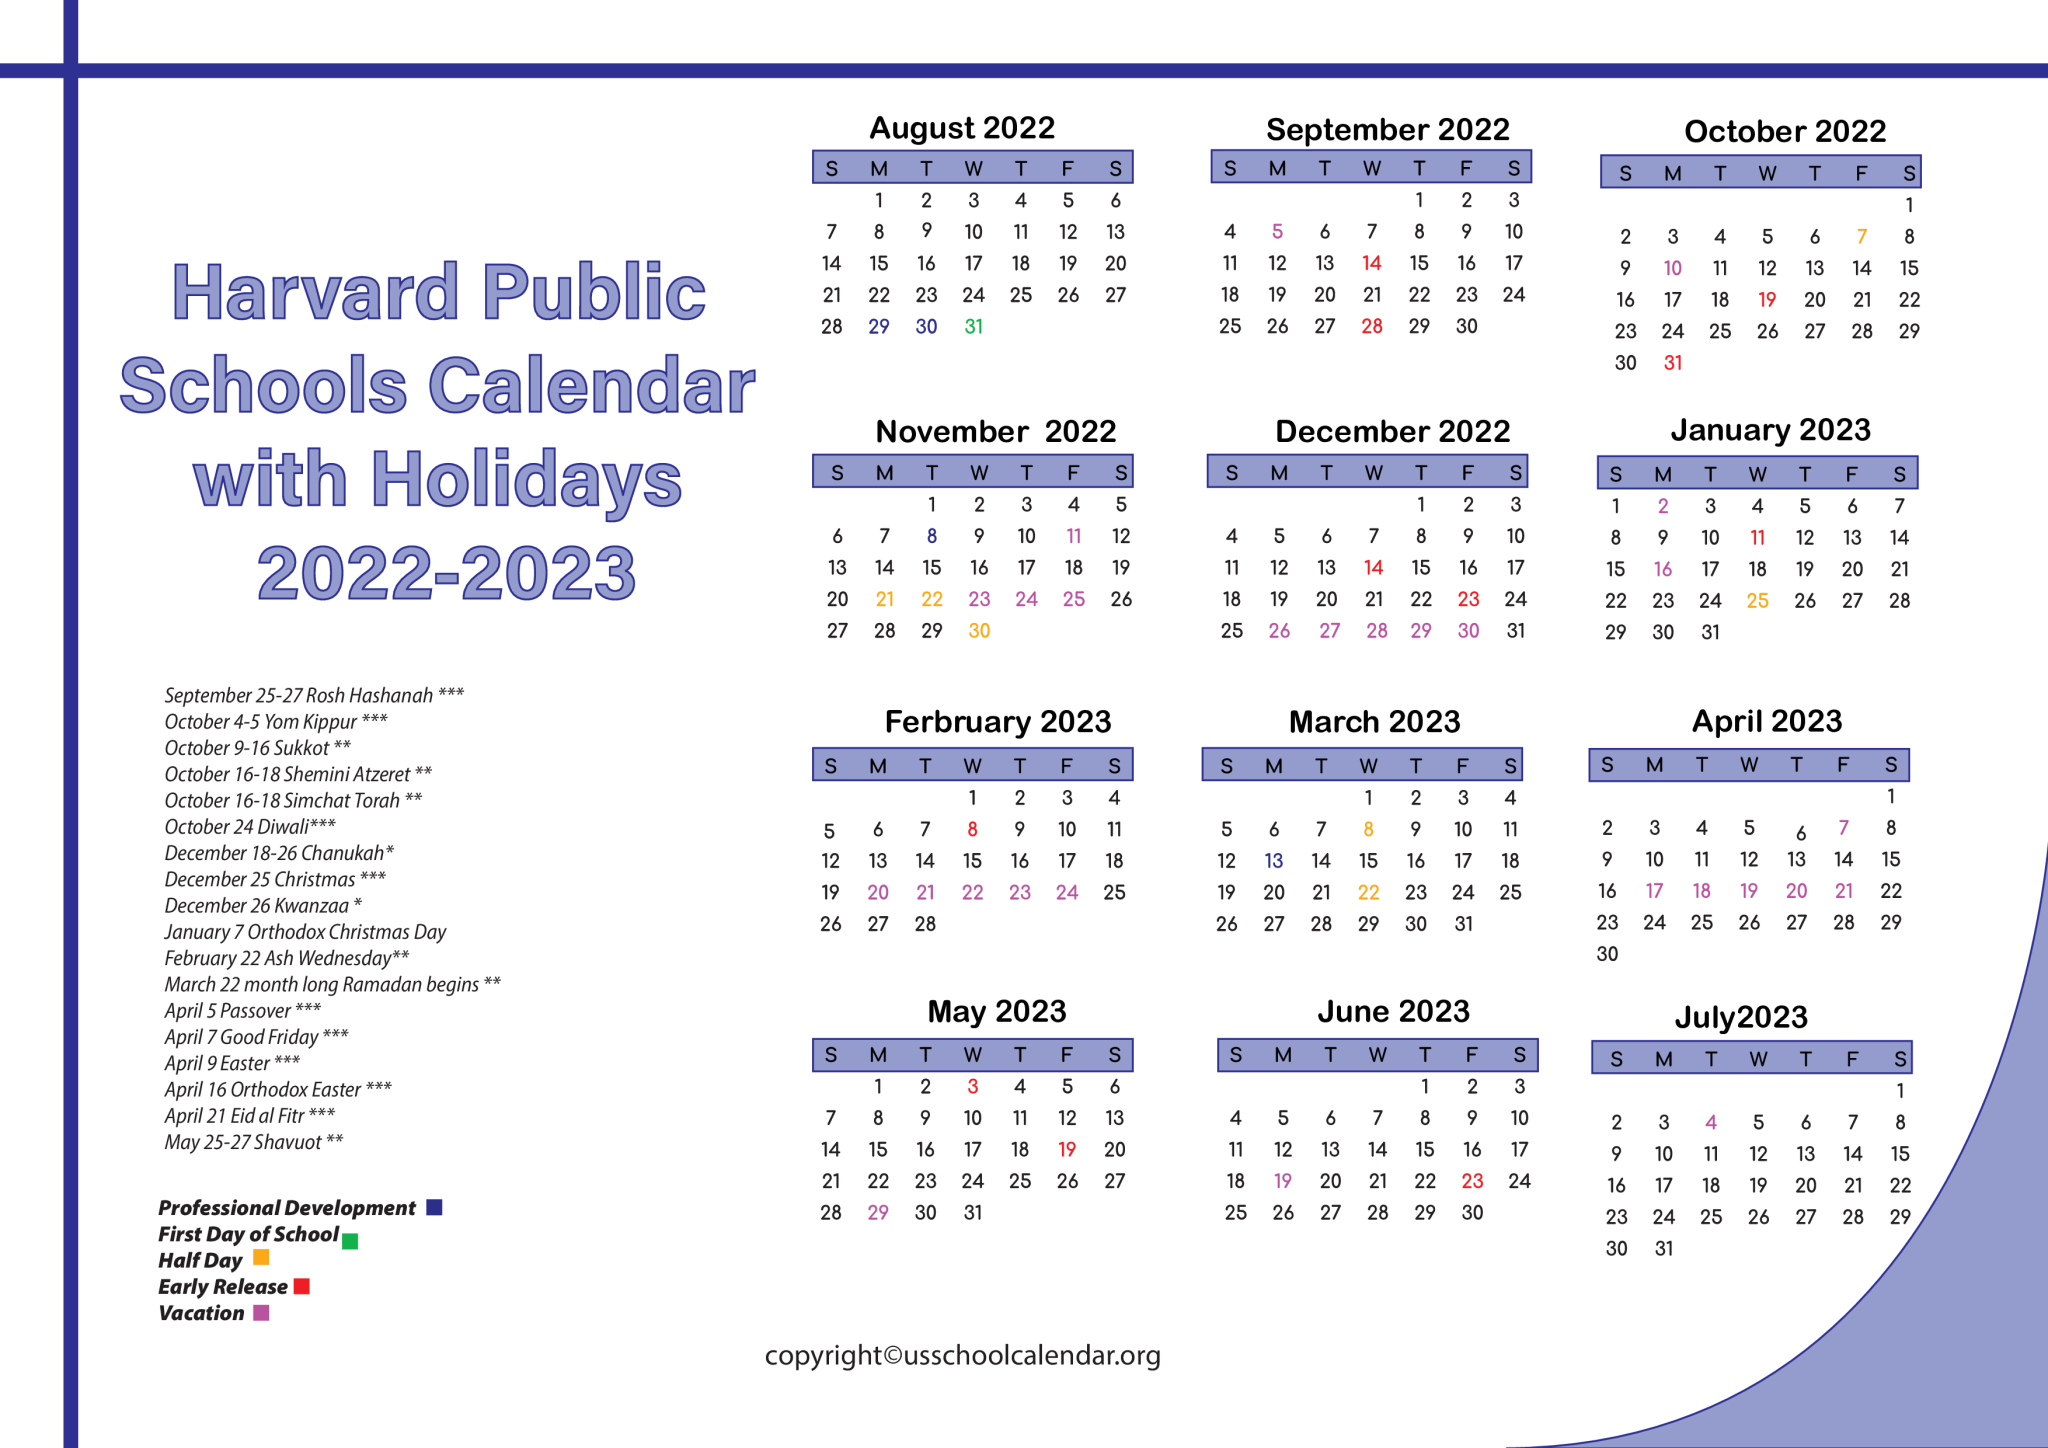 Harvard Public Schools Calendar with Holidays 2023